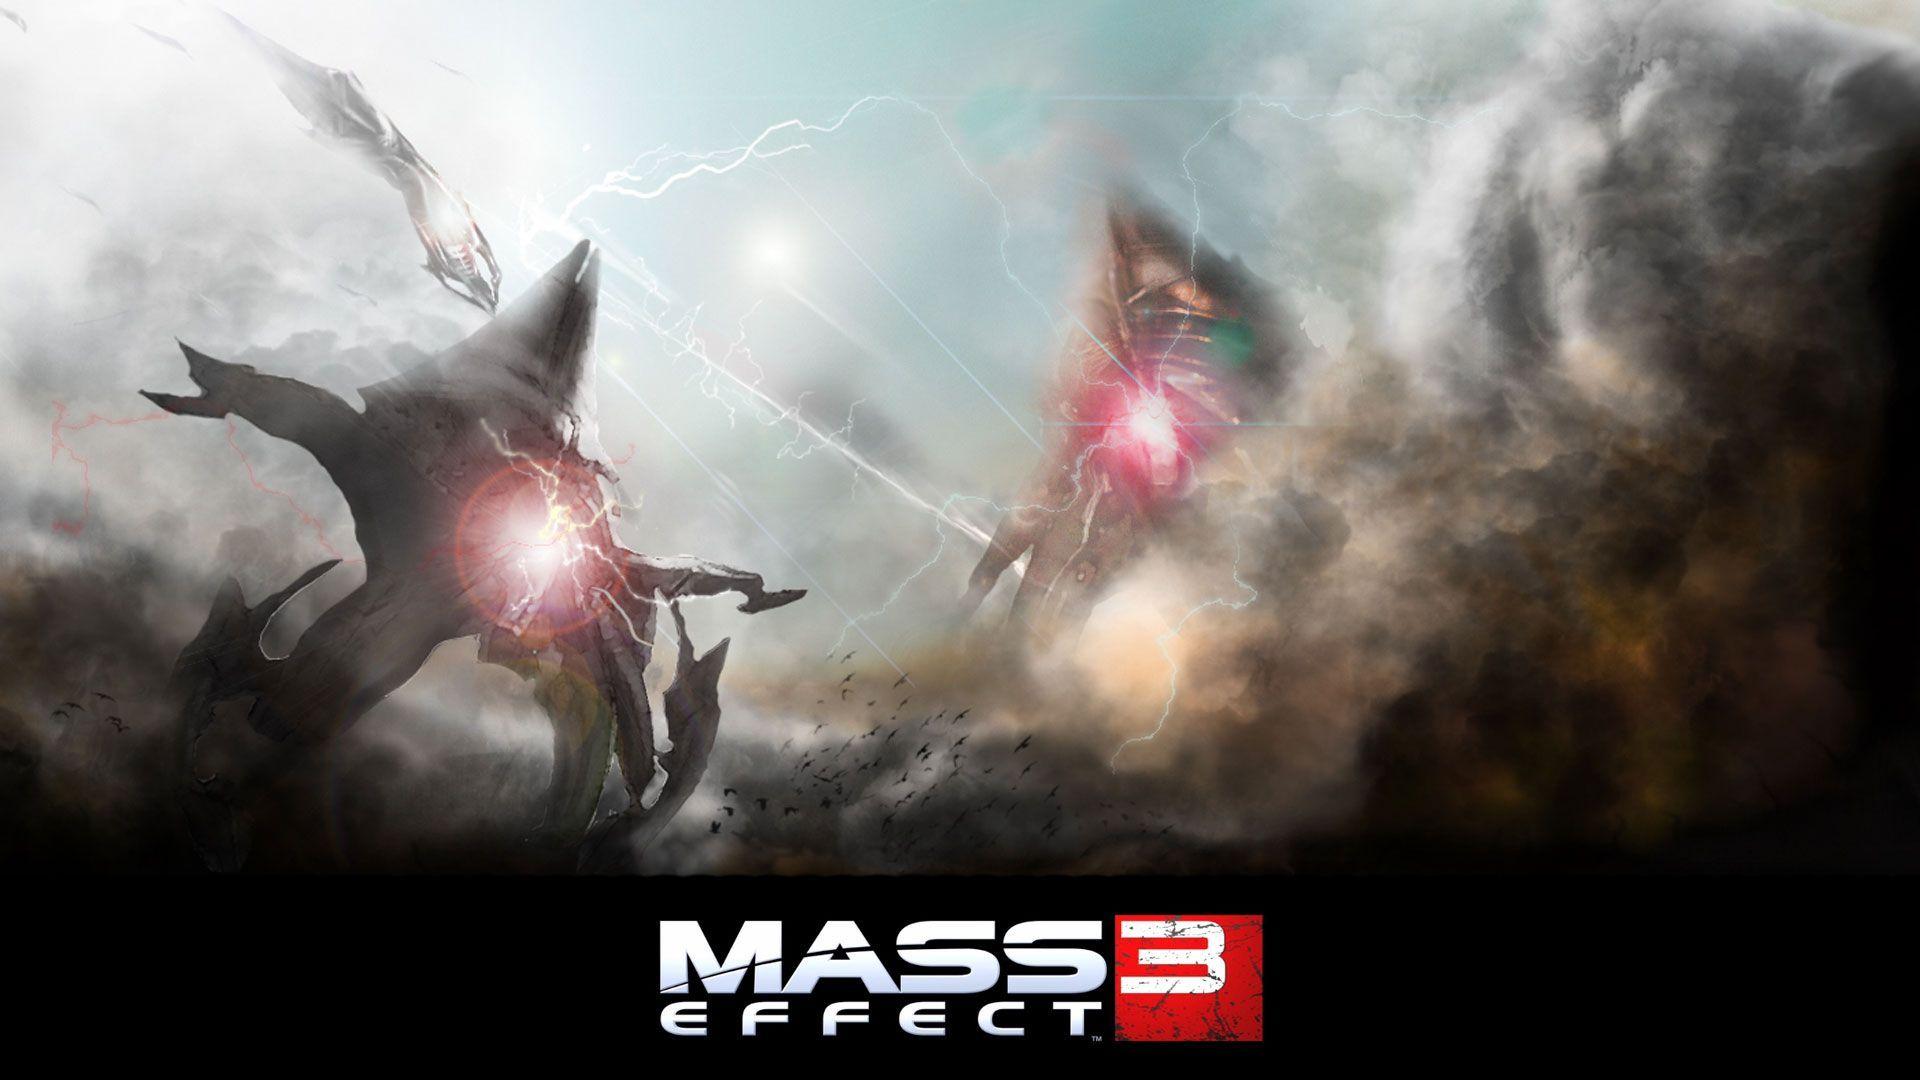 Mass Effect 3 Wallpaper in HD